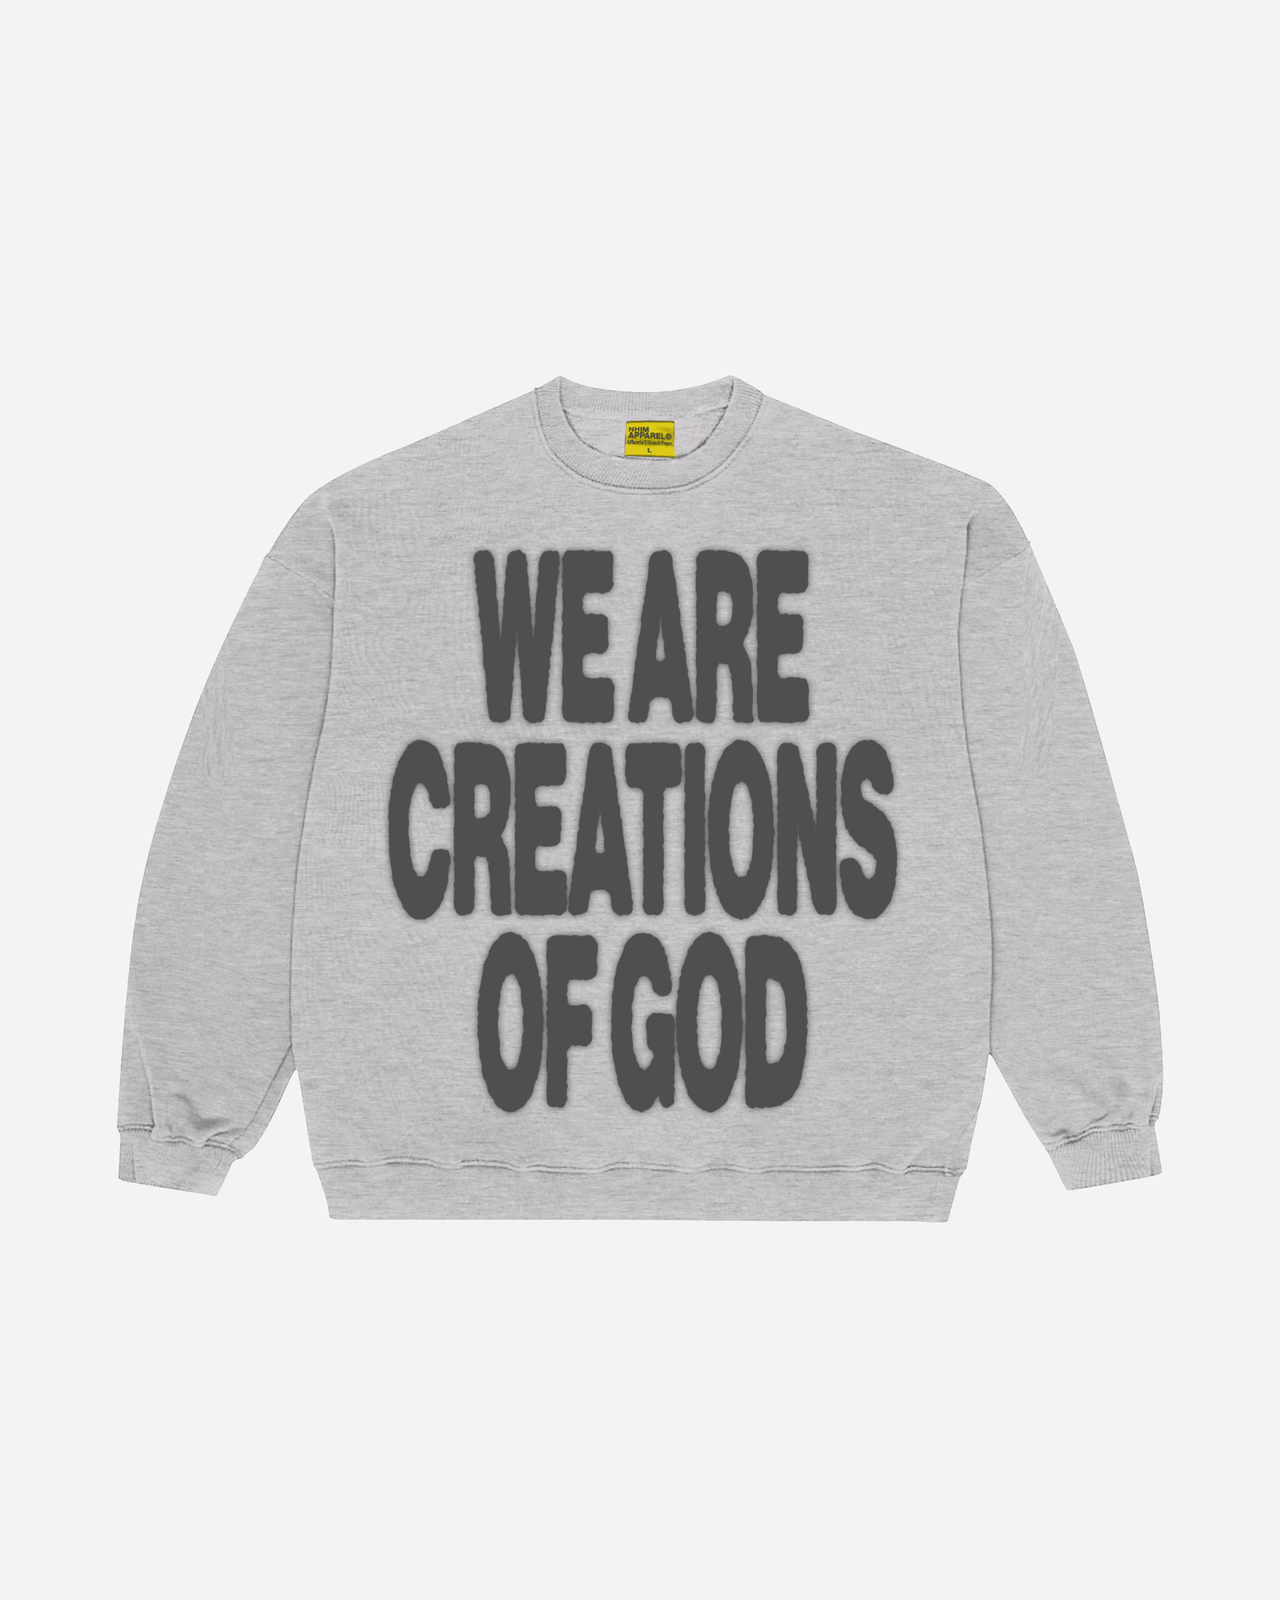 WE ARE CREATIONS OF GOD ash crewneck sweatshirt by NHIM Apparel Christian clothing brand